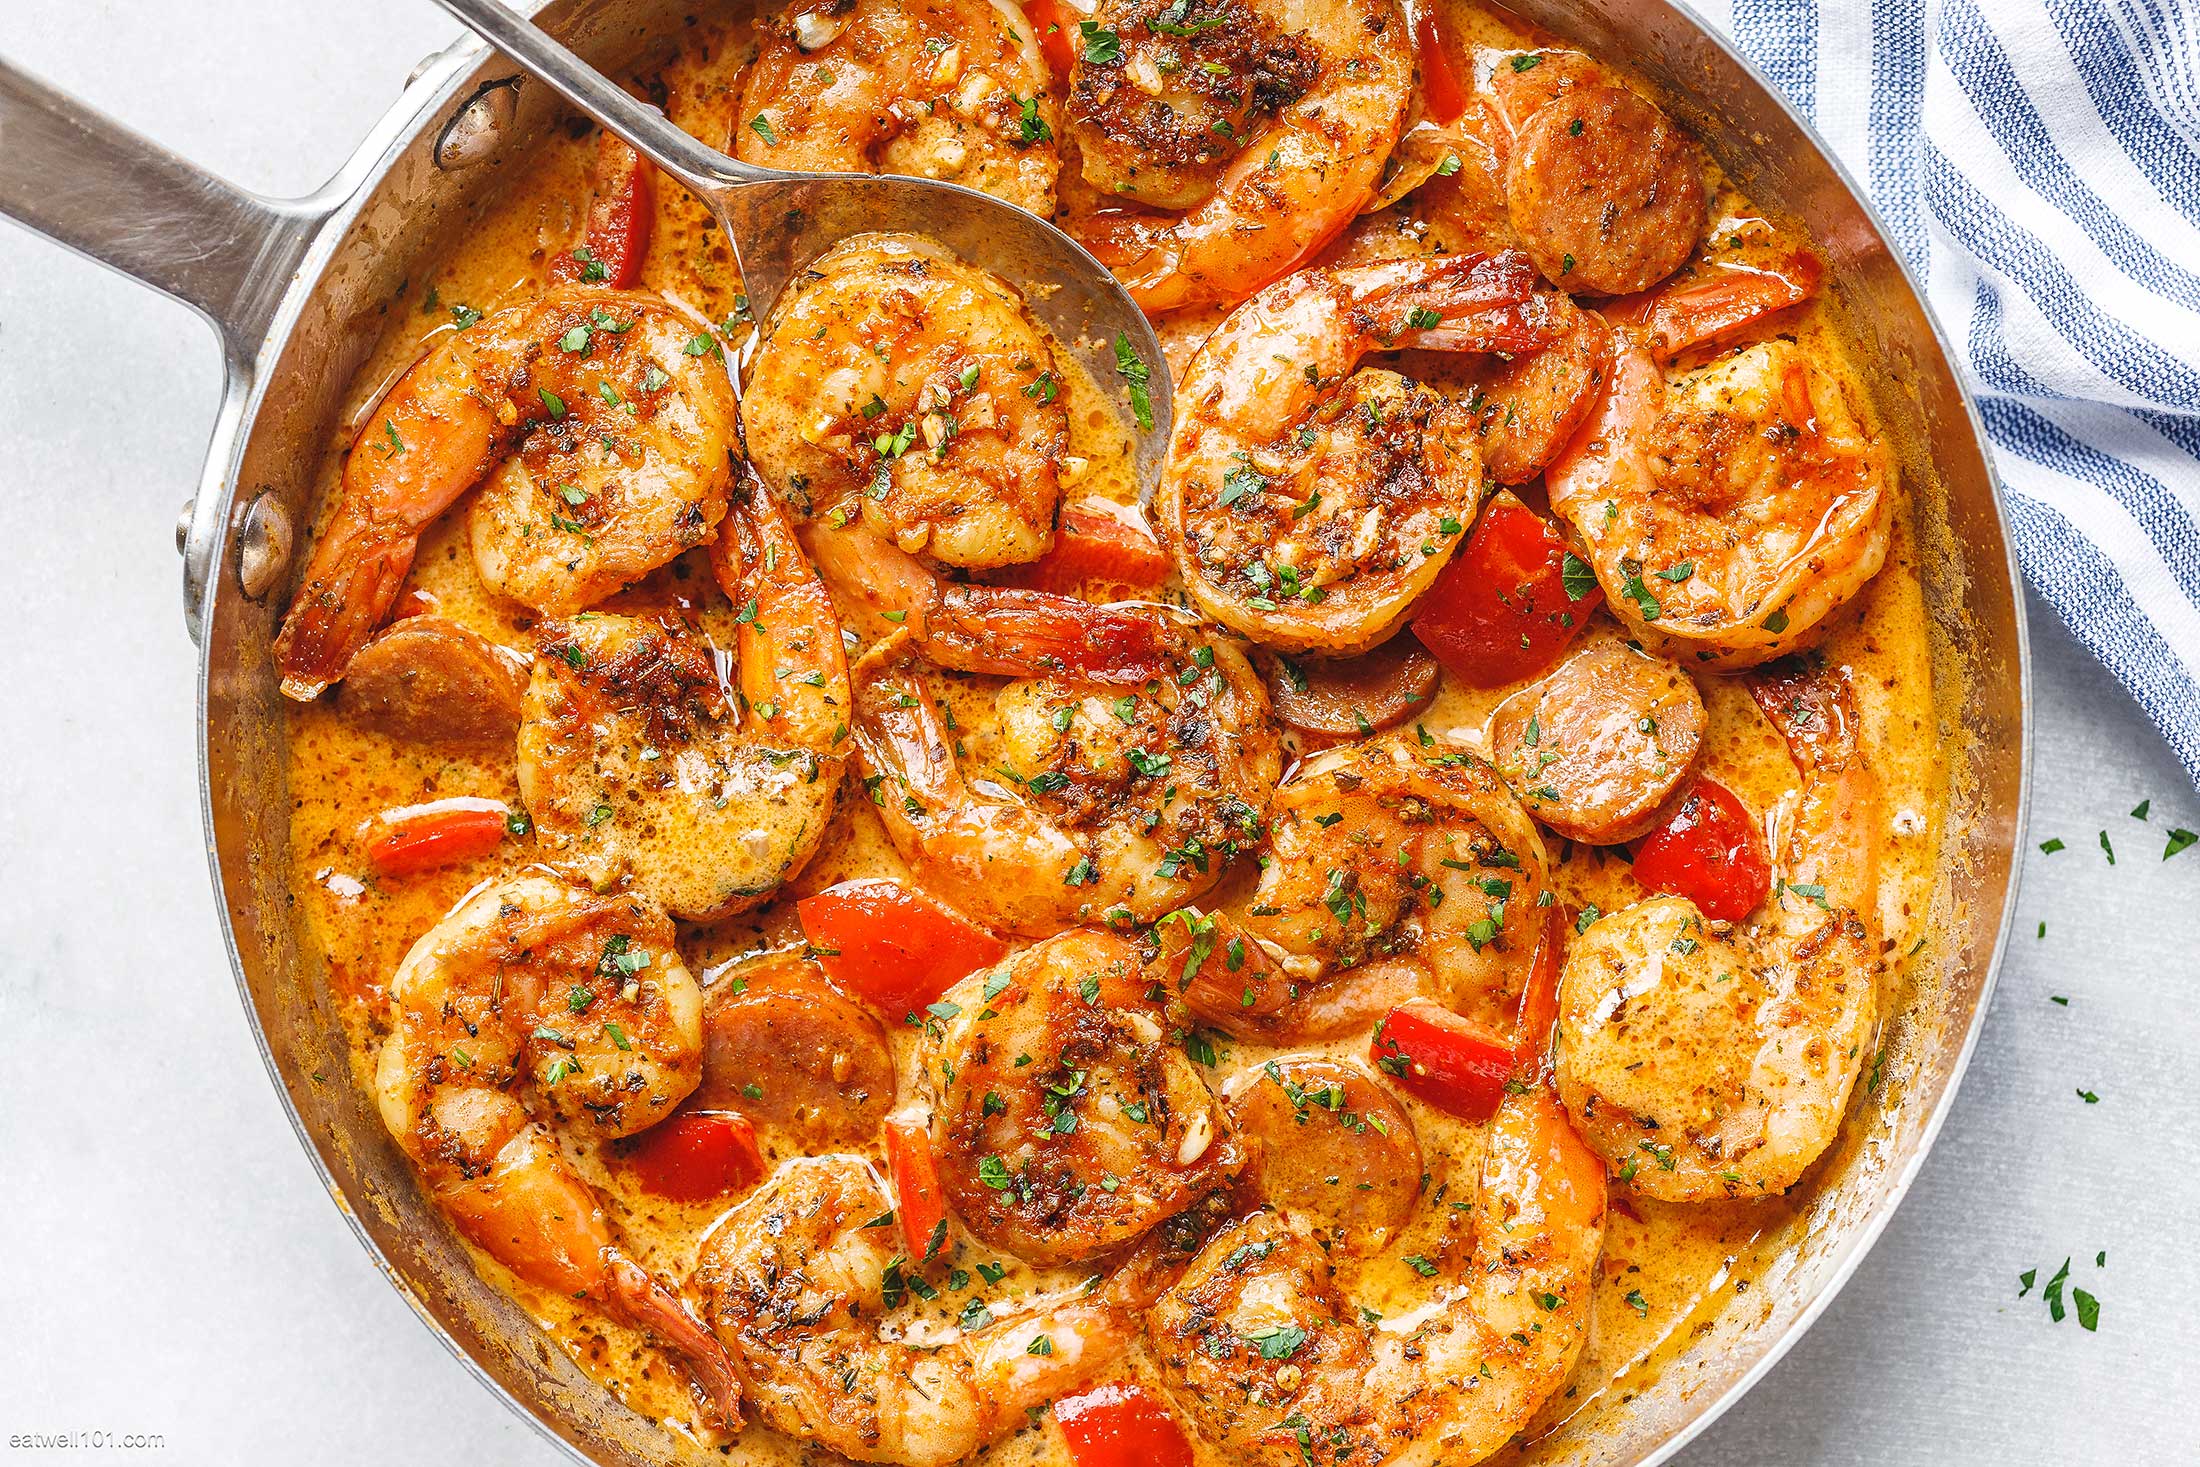 https://www.eatwell101.com/wp-content/uploads/2020/03/Cajun-Shrimp-and-Sausage-recipe.jpg